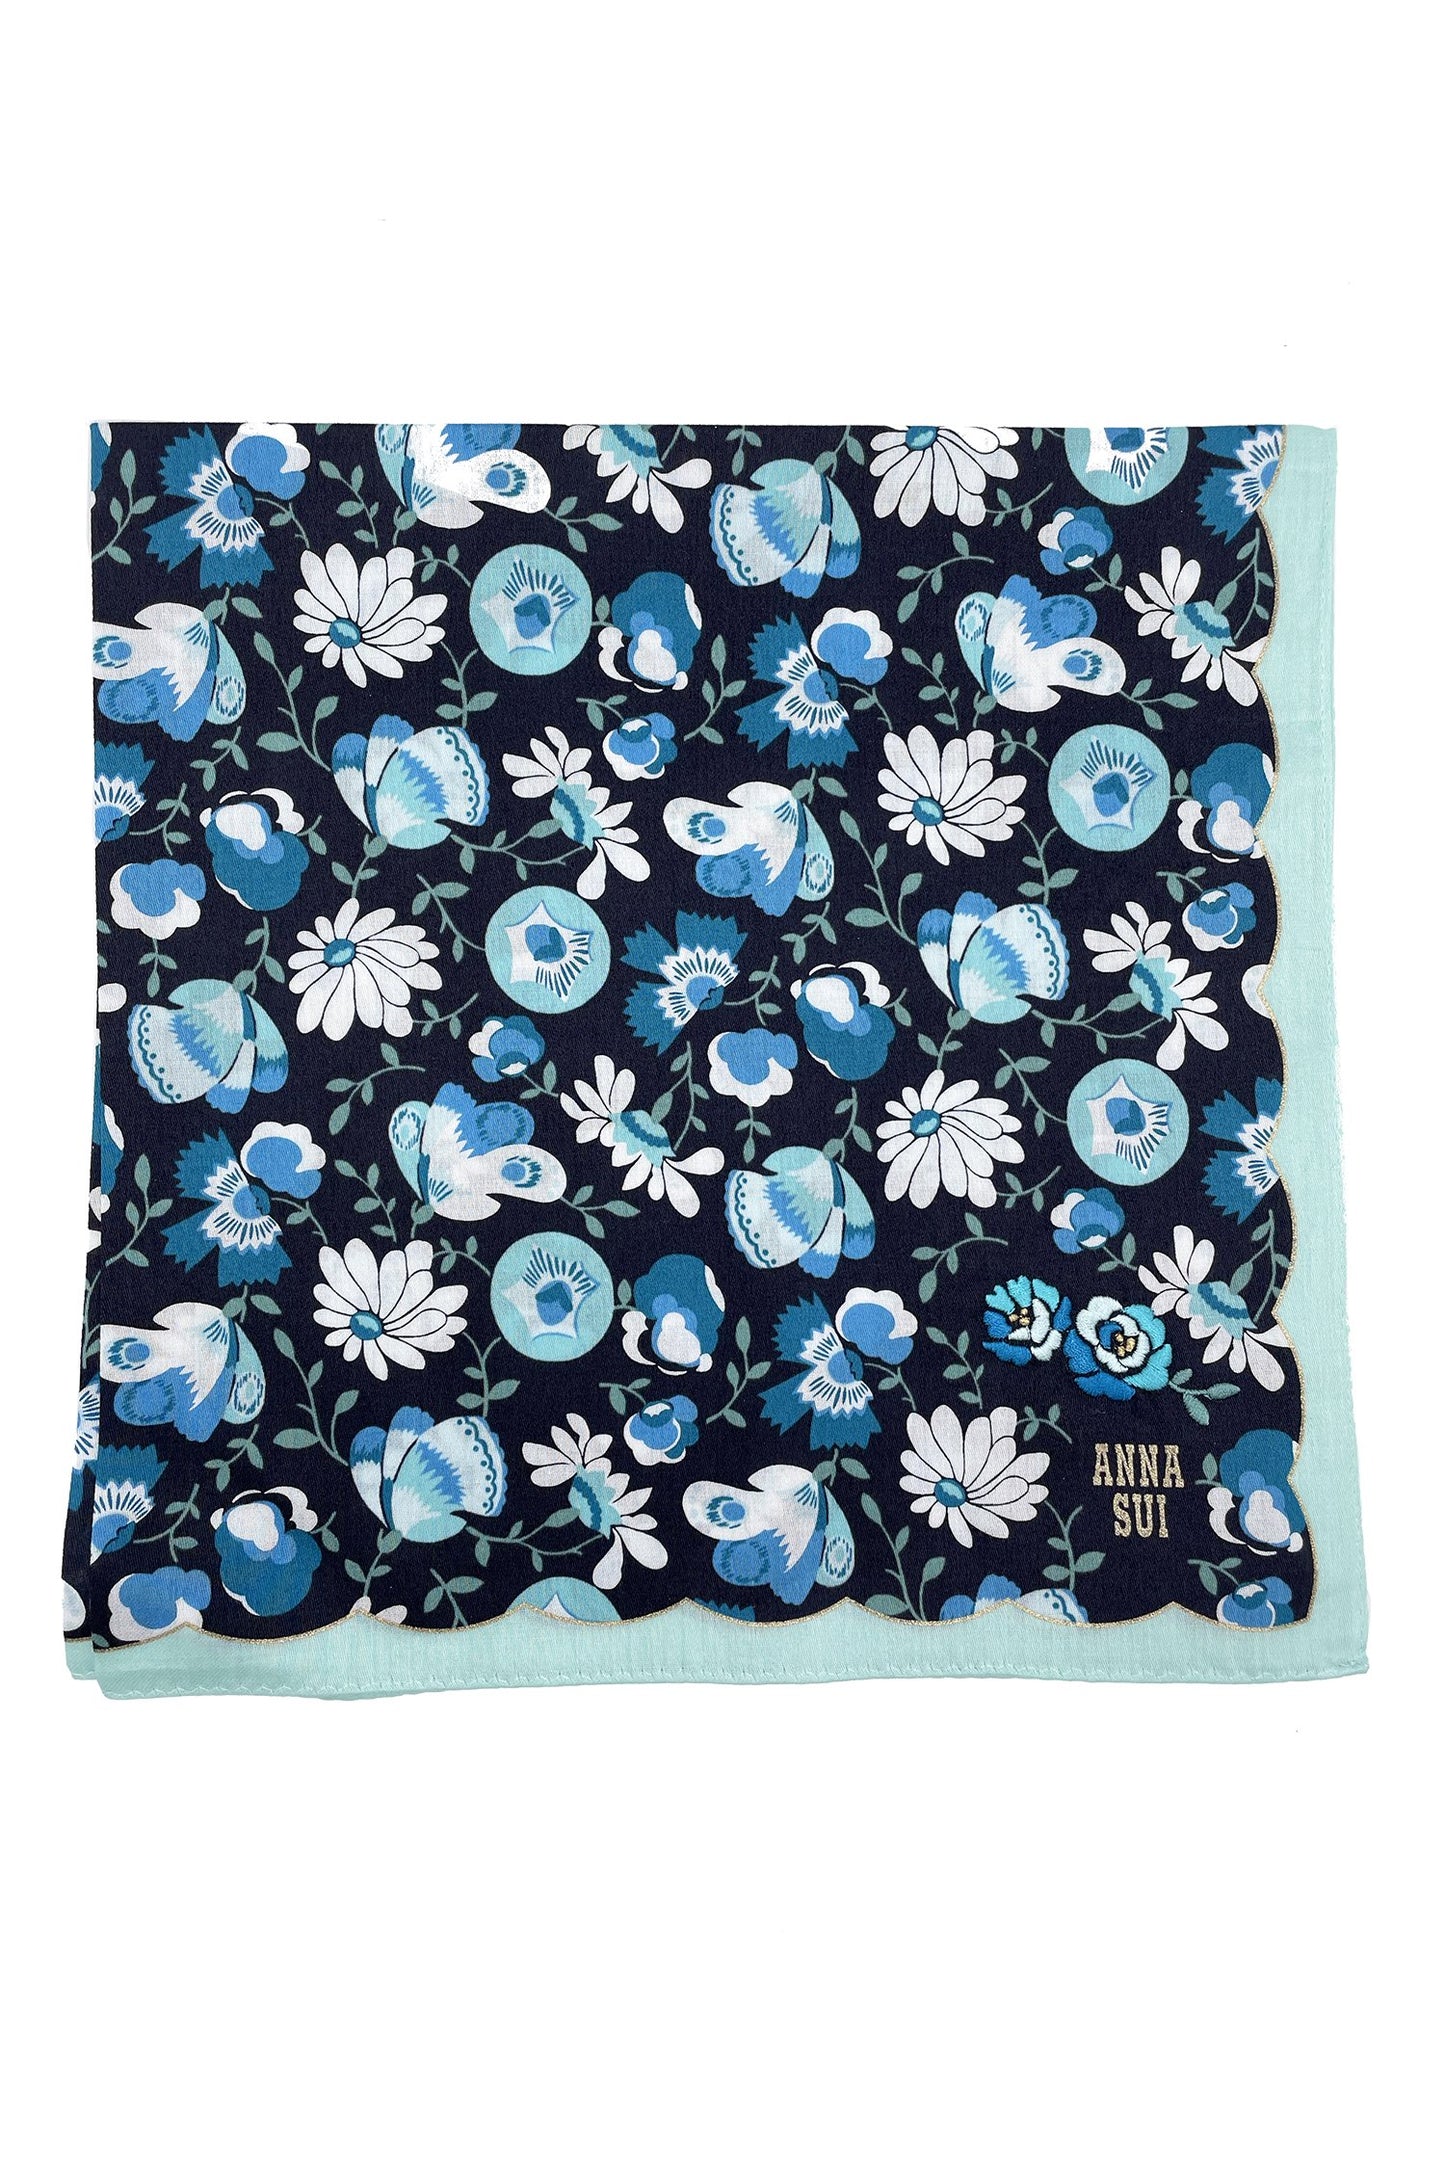 Handkerchief with white/blue daisy on dark blue, wavy baby blue hems, Anna’s label in corner